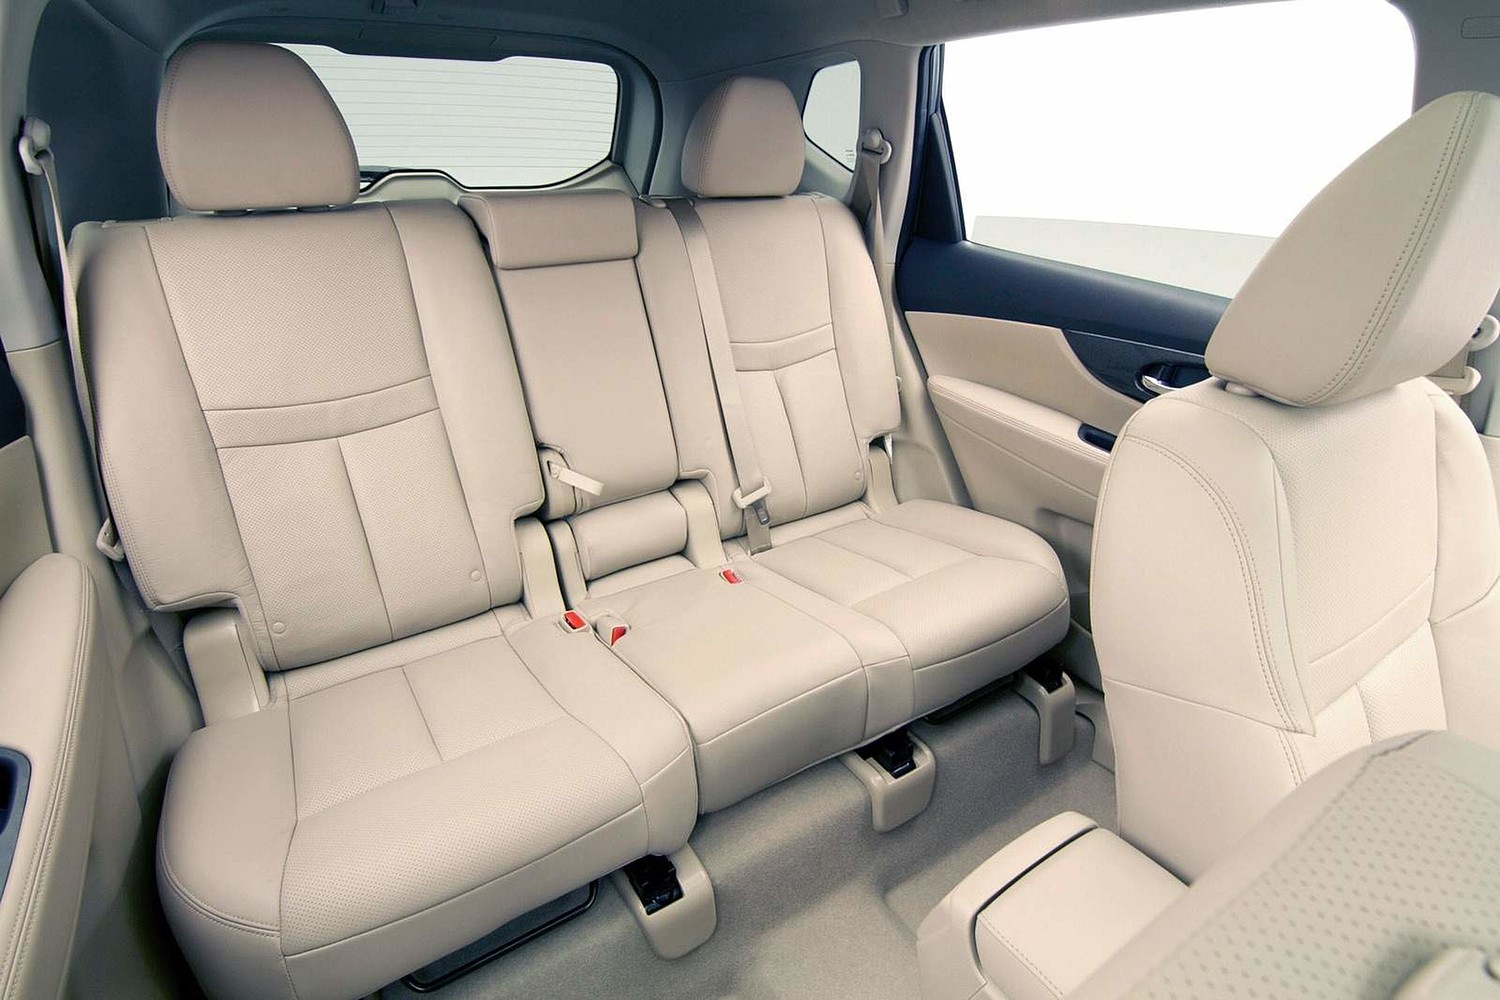 Nissan Rogue SL 4dr SUV Rear Interior (2014 model year shown)